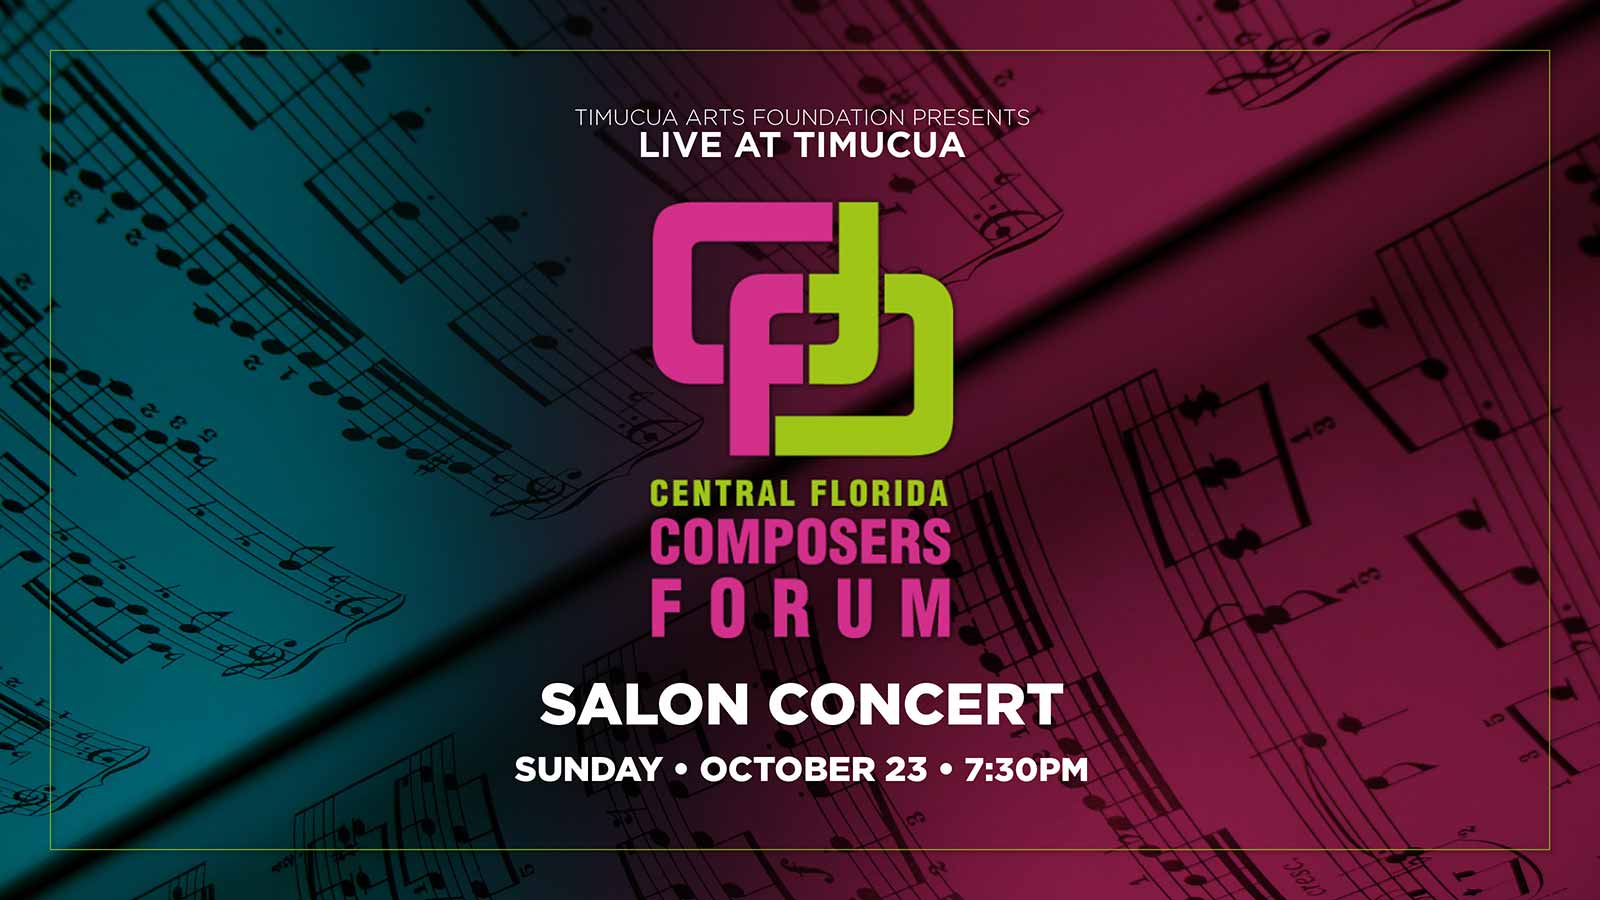 Central Florida Composers Forum Salon Concert